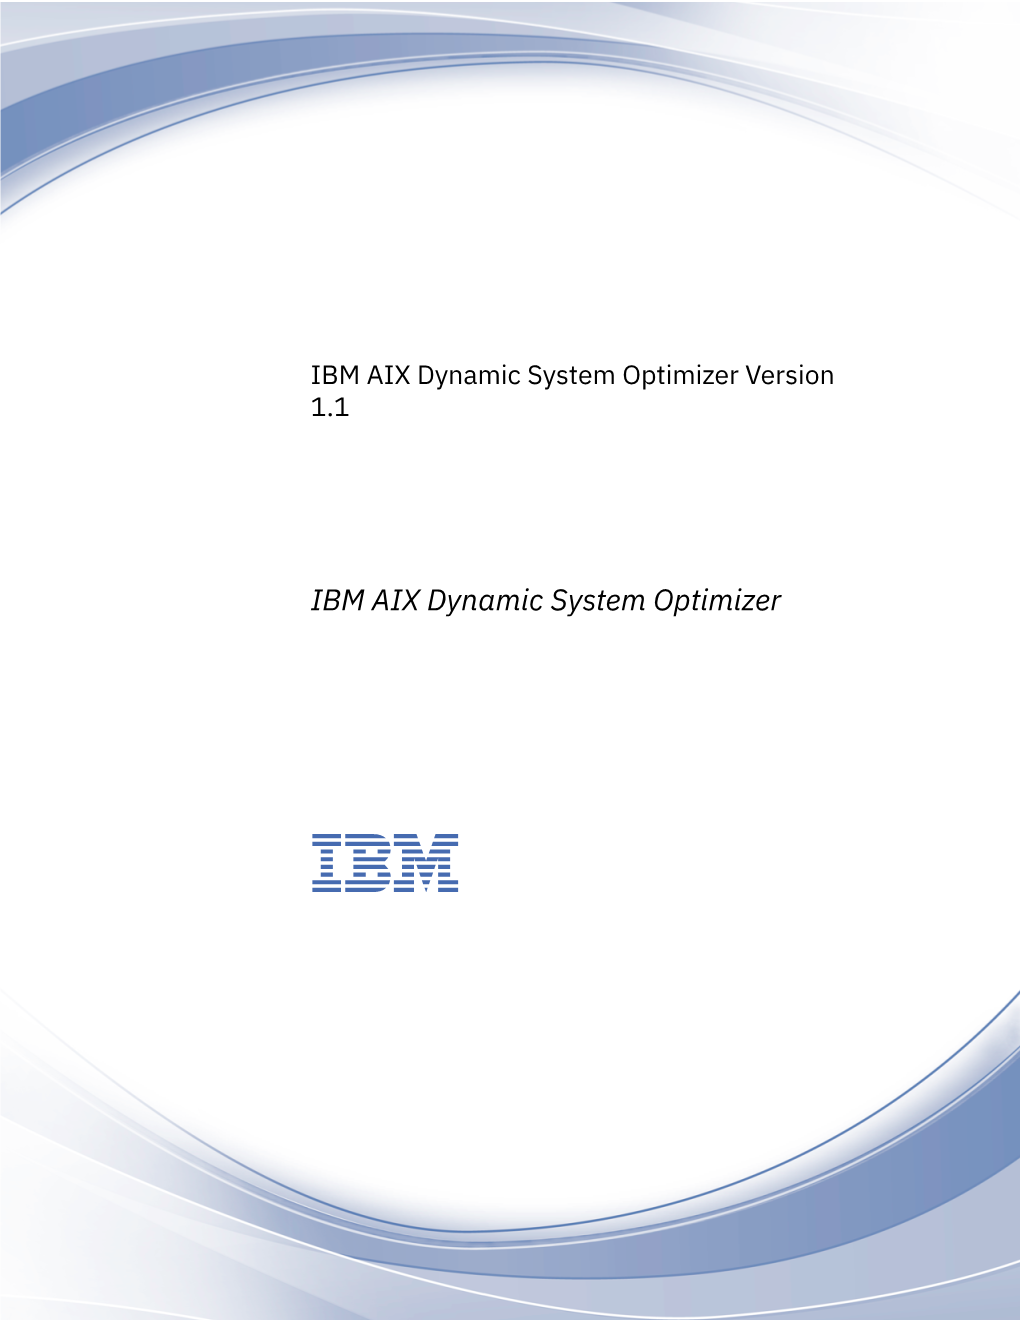 IBM AIX Dynamic System Optimizer Version 1.1